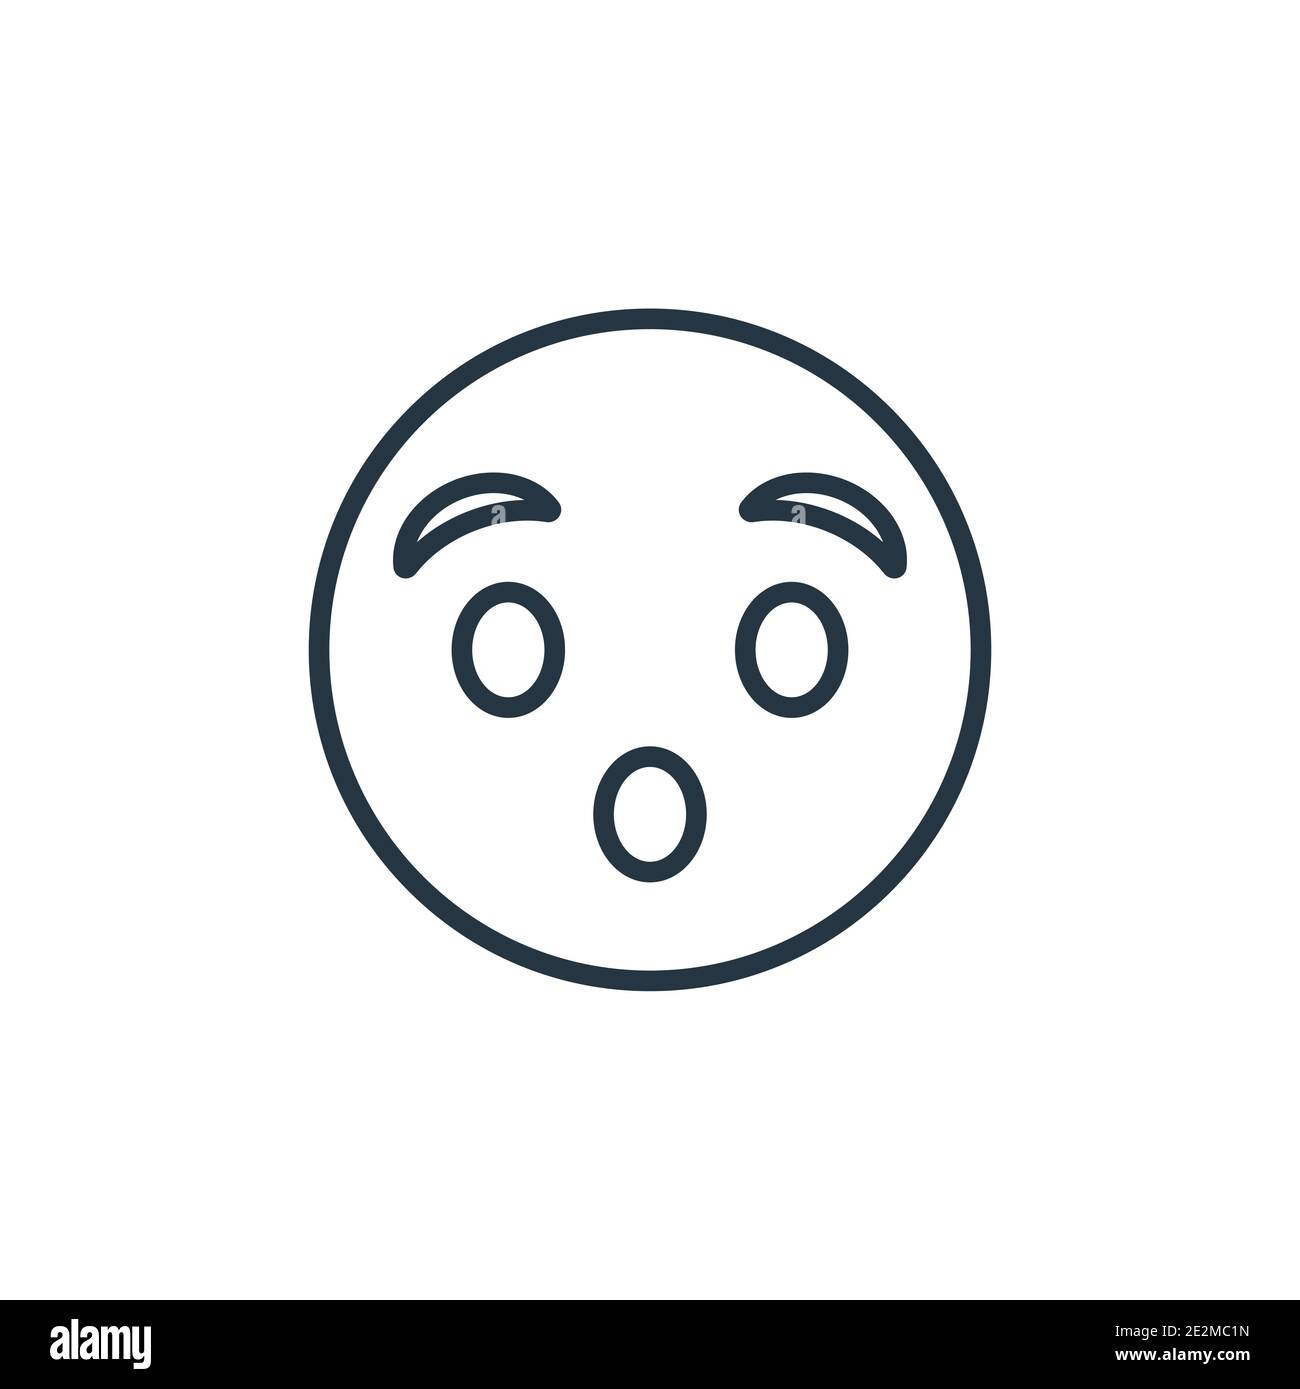 Free Vector  Hand drawn shocked emoji illustration